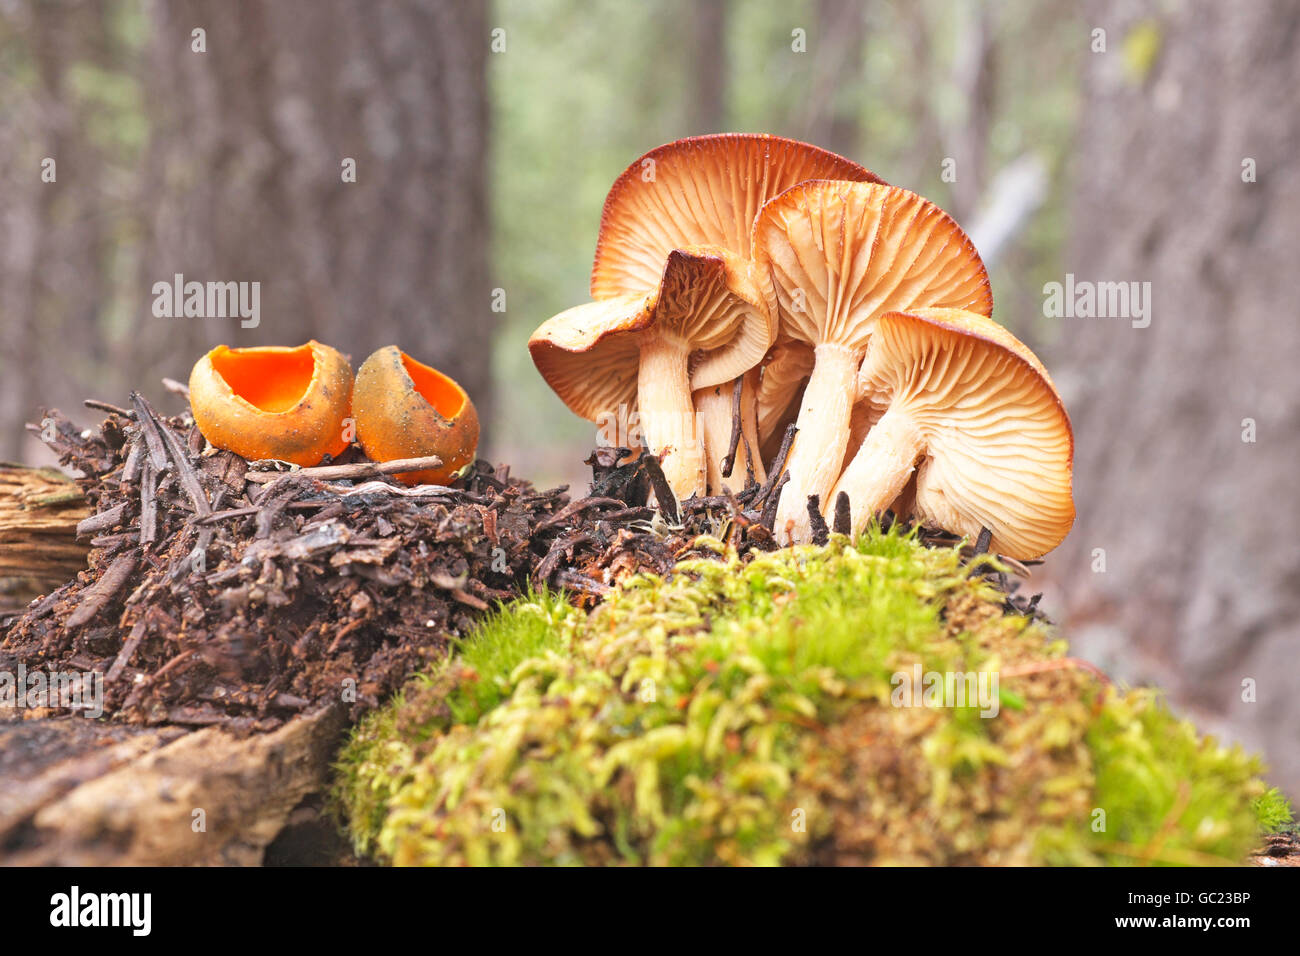 Calosypha fulgens, spring orange peel, left, and Marasmius oreades, or fairy ring mushrooms, in a pine spruce forest in the Pacific Northwest. Stock Photo